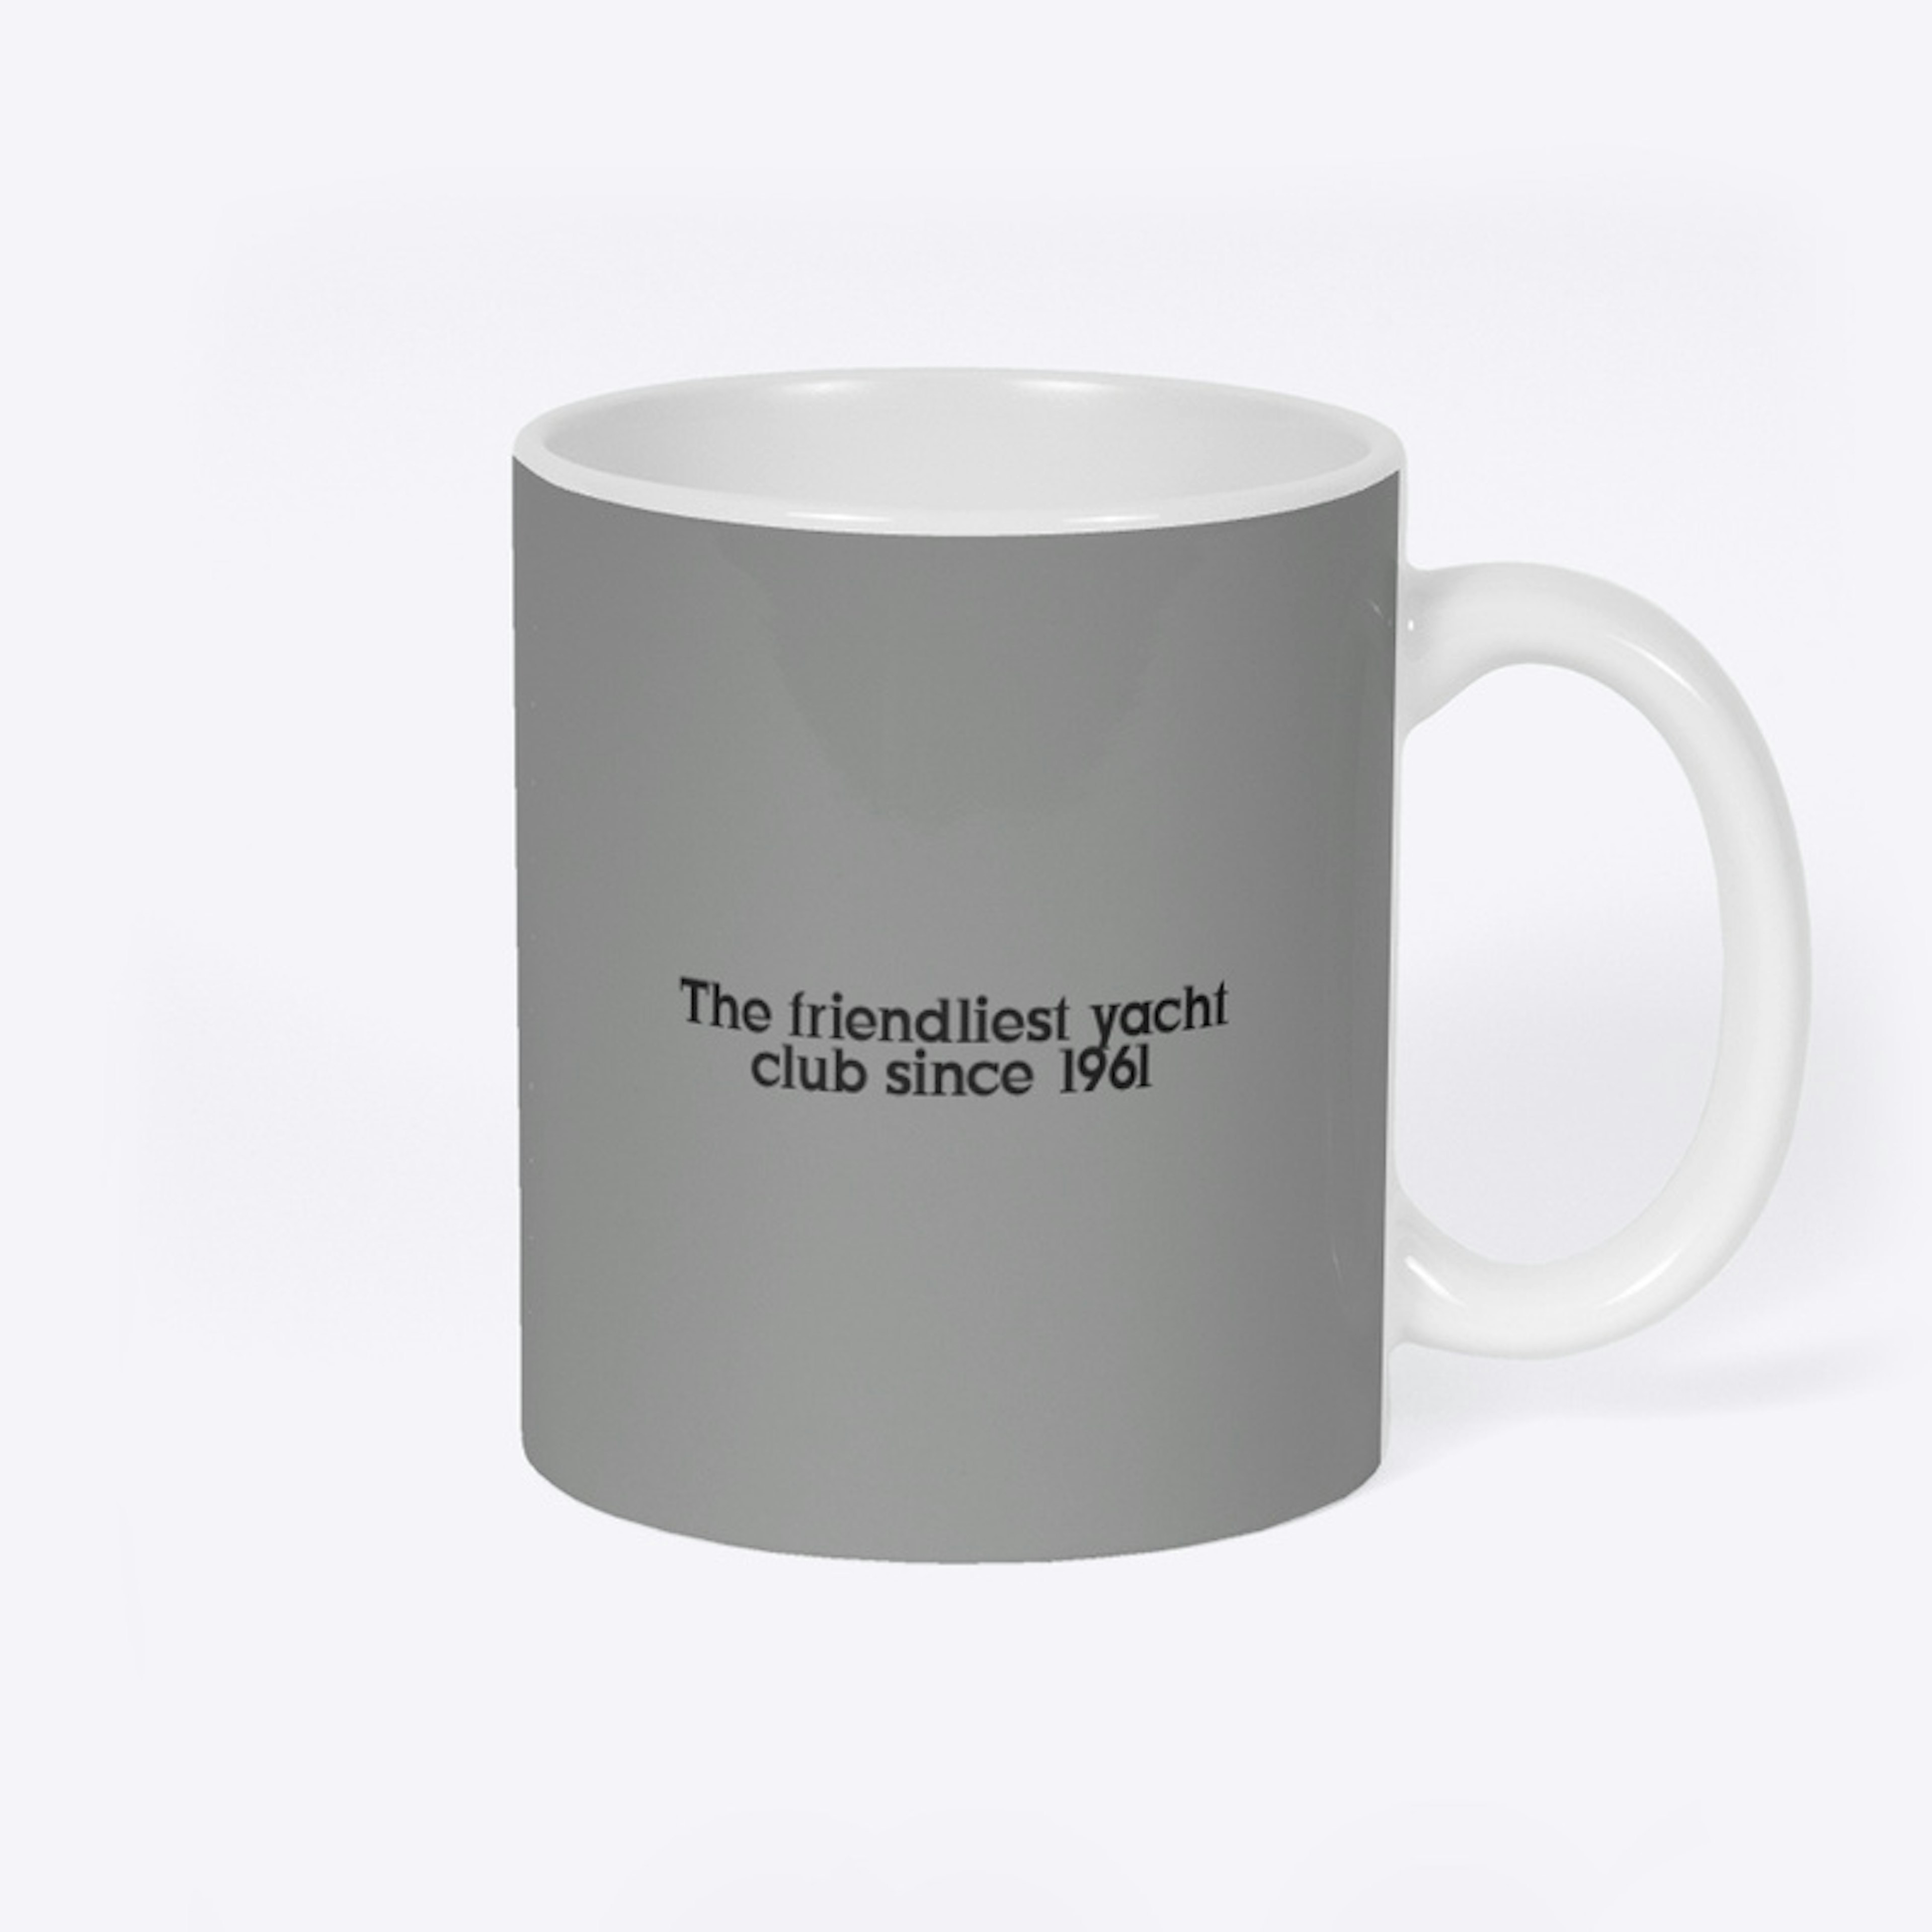 User friendly coffee mug